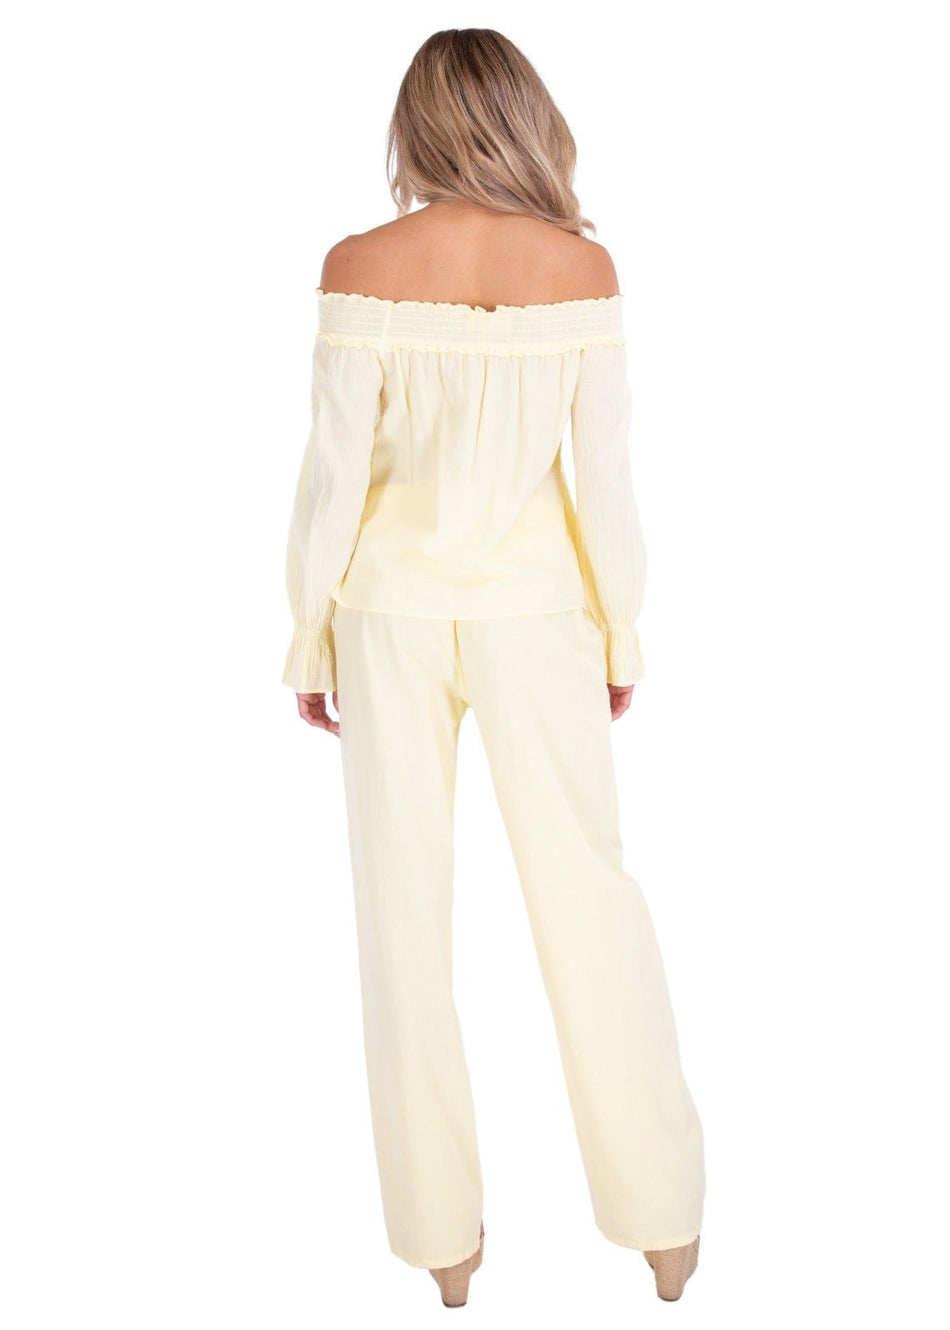 Magnolia' Crochet Front Detail Pants Baby Yellow - Seaspice Resort Wear